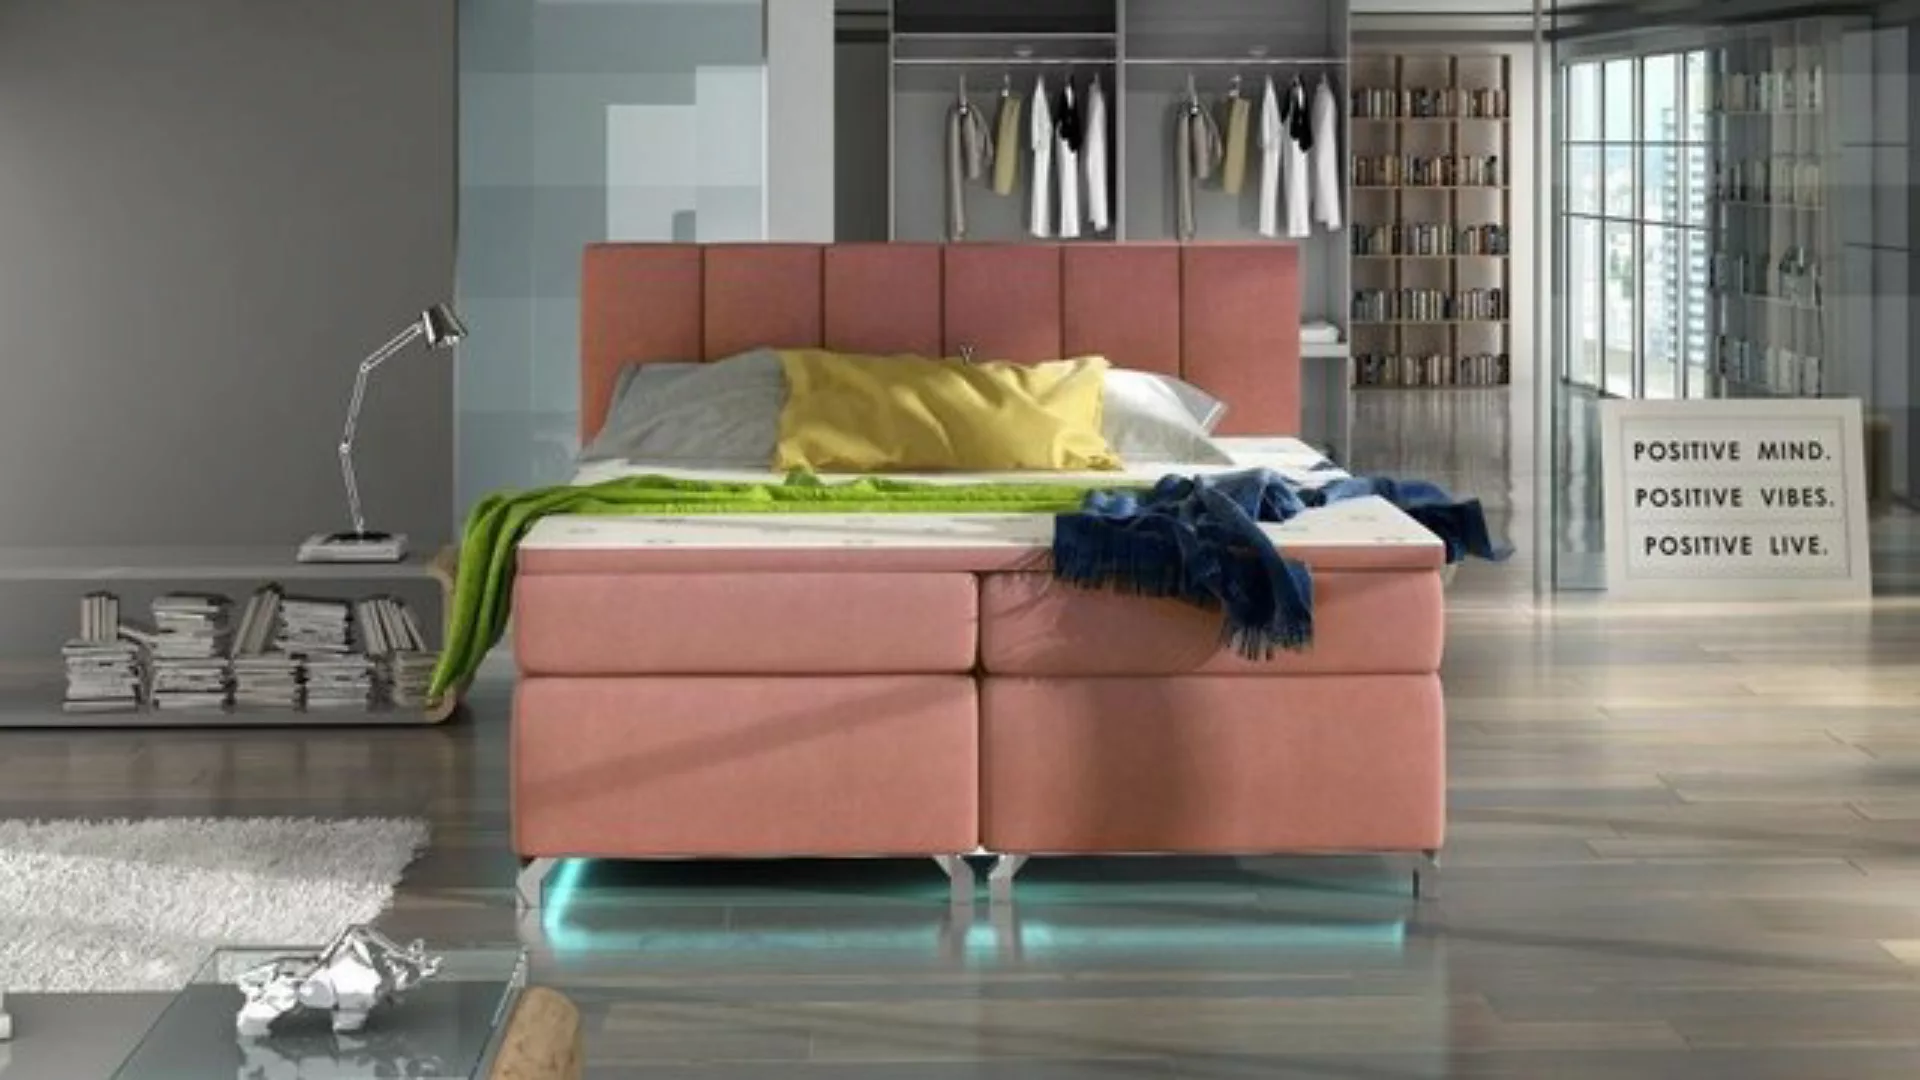 JVmoebel Bett Luxus Designer Polsterbett Bett Betten Designerbett Boxspring günstig online kaufen